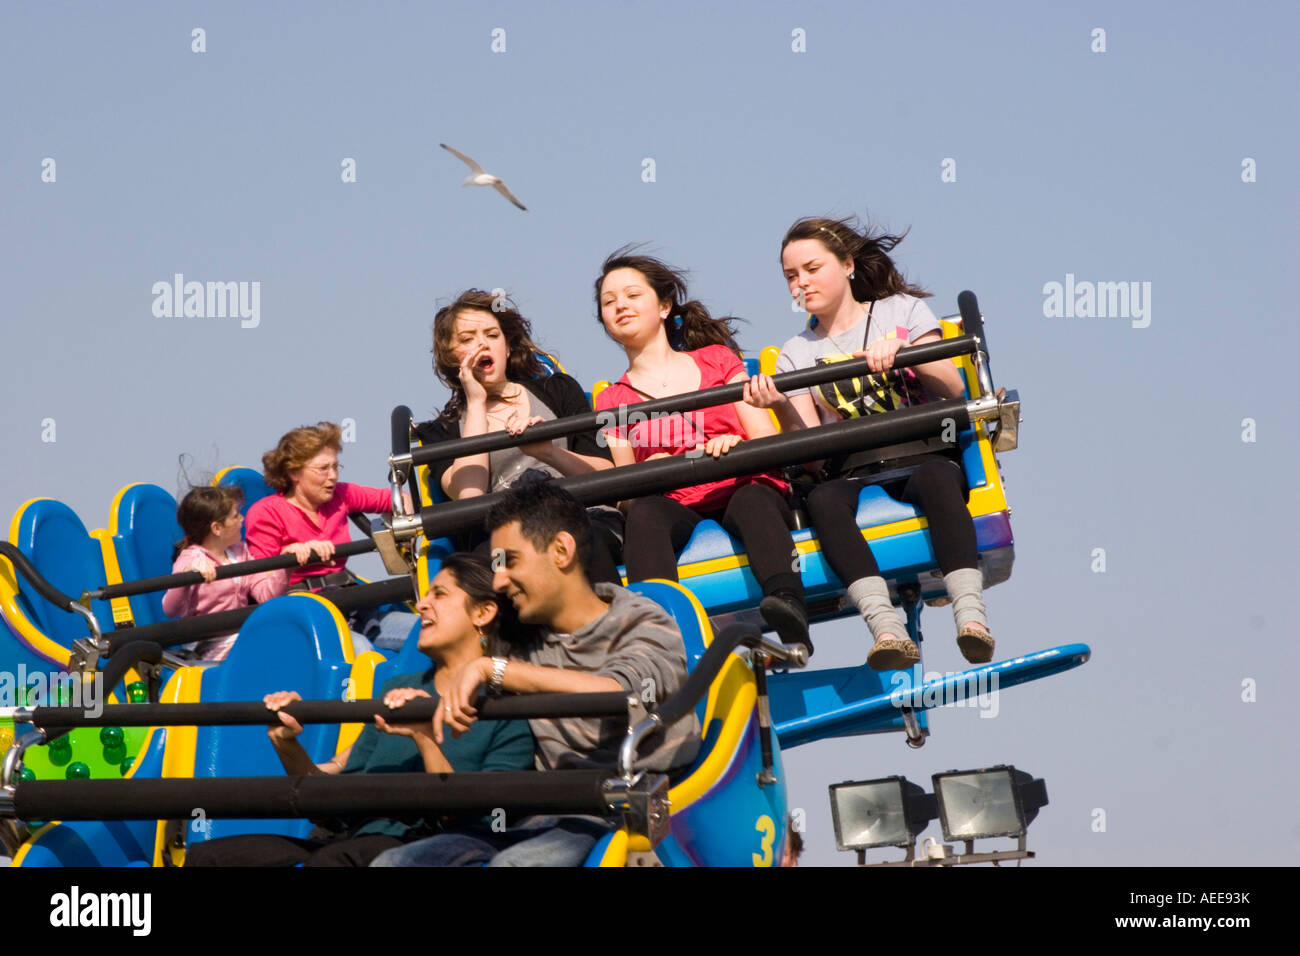 People enjoying a fairground ride Stock Photo